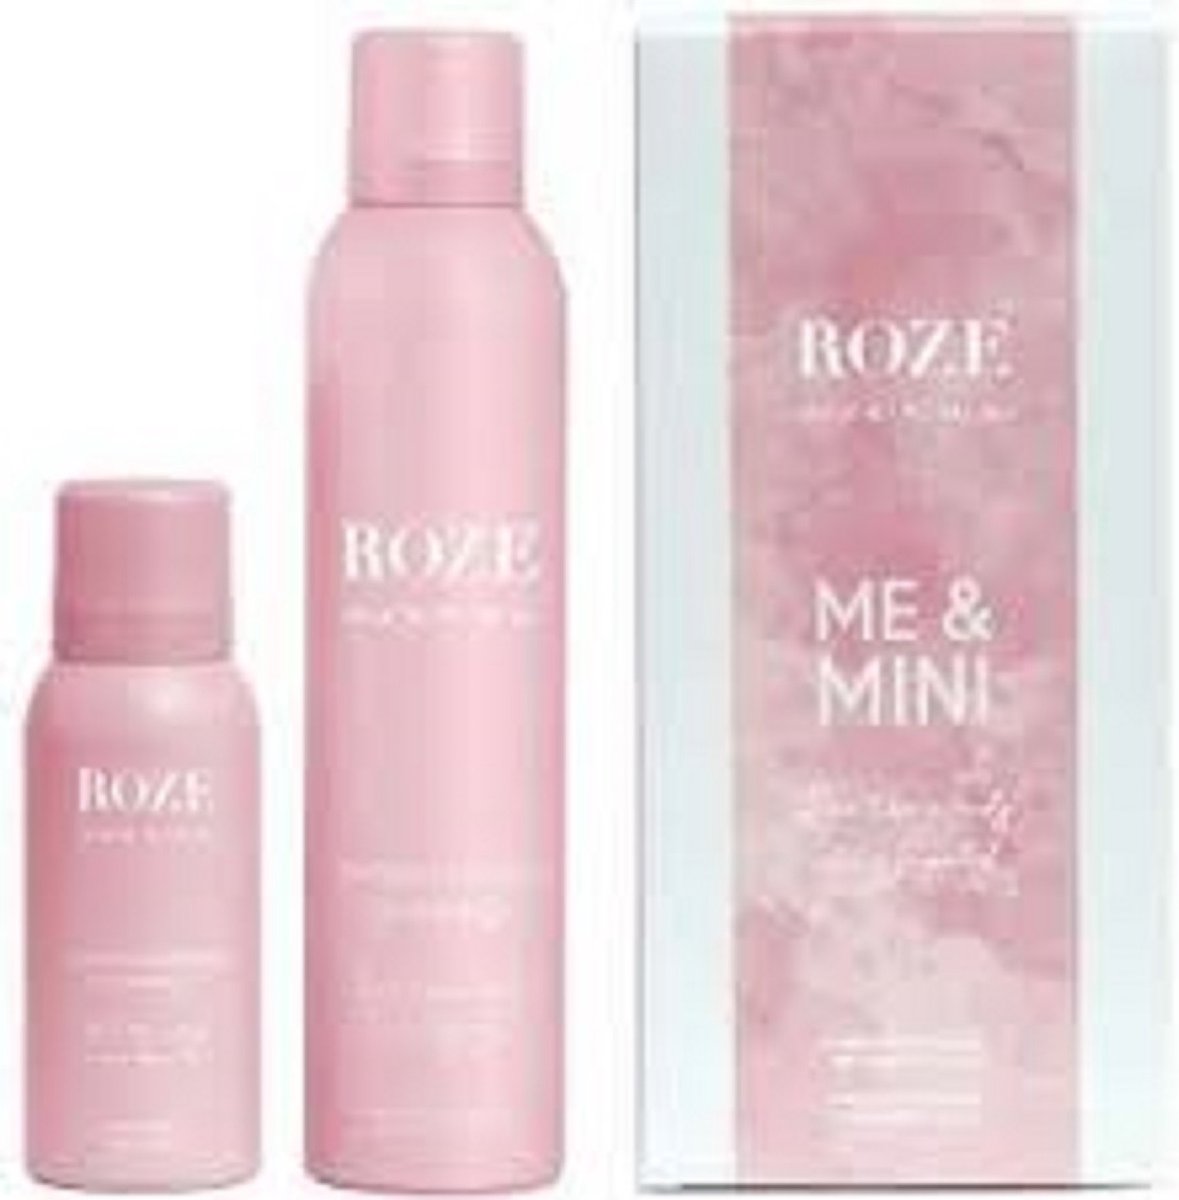 ROZE Avenue Me&Mini Dry Shampoo Duo Box (Limited Edition)